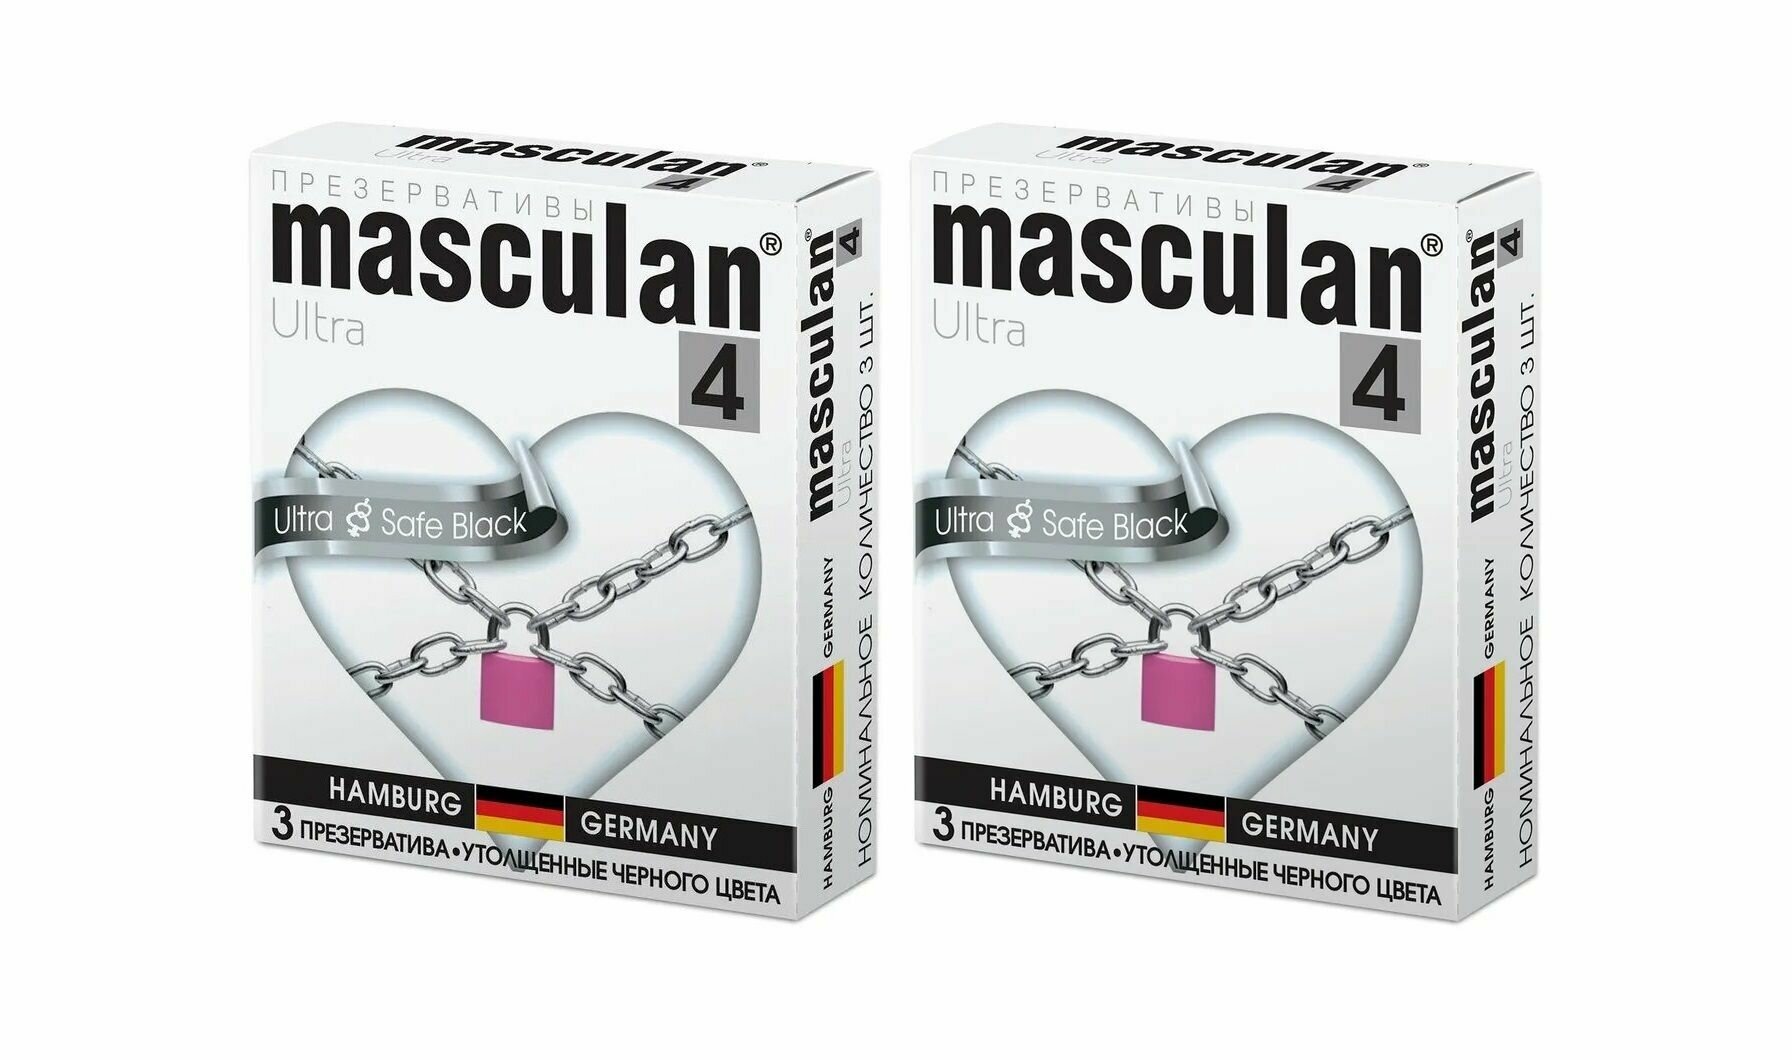 Masculan Презервативы 4 Ultra №3, ультрапрочные, 2 упаковки/